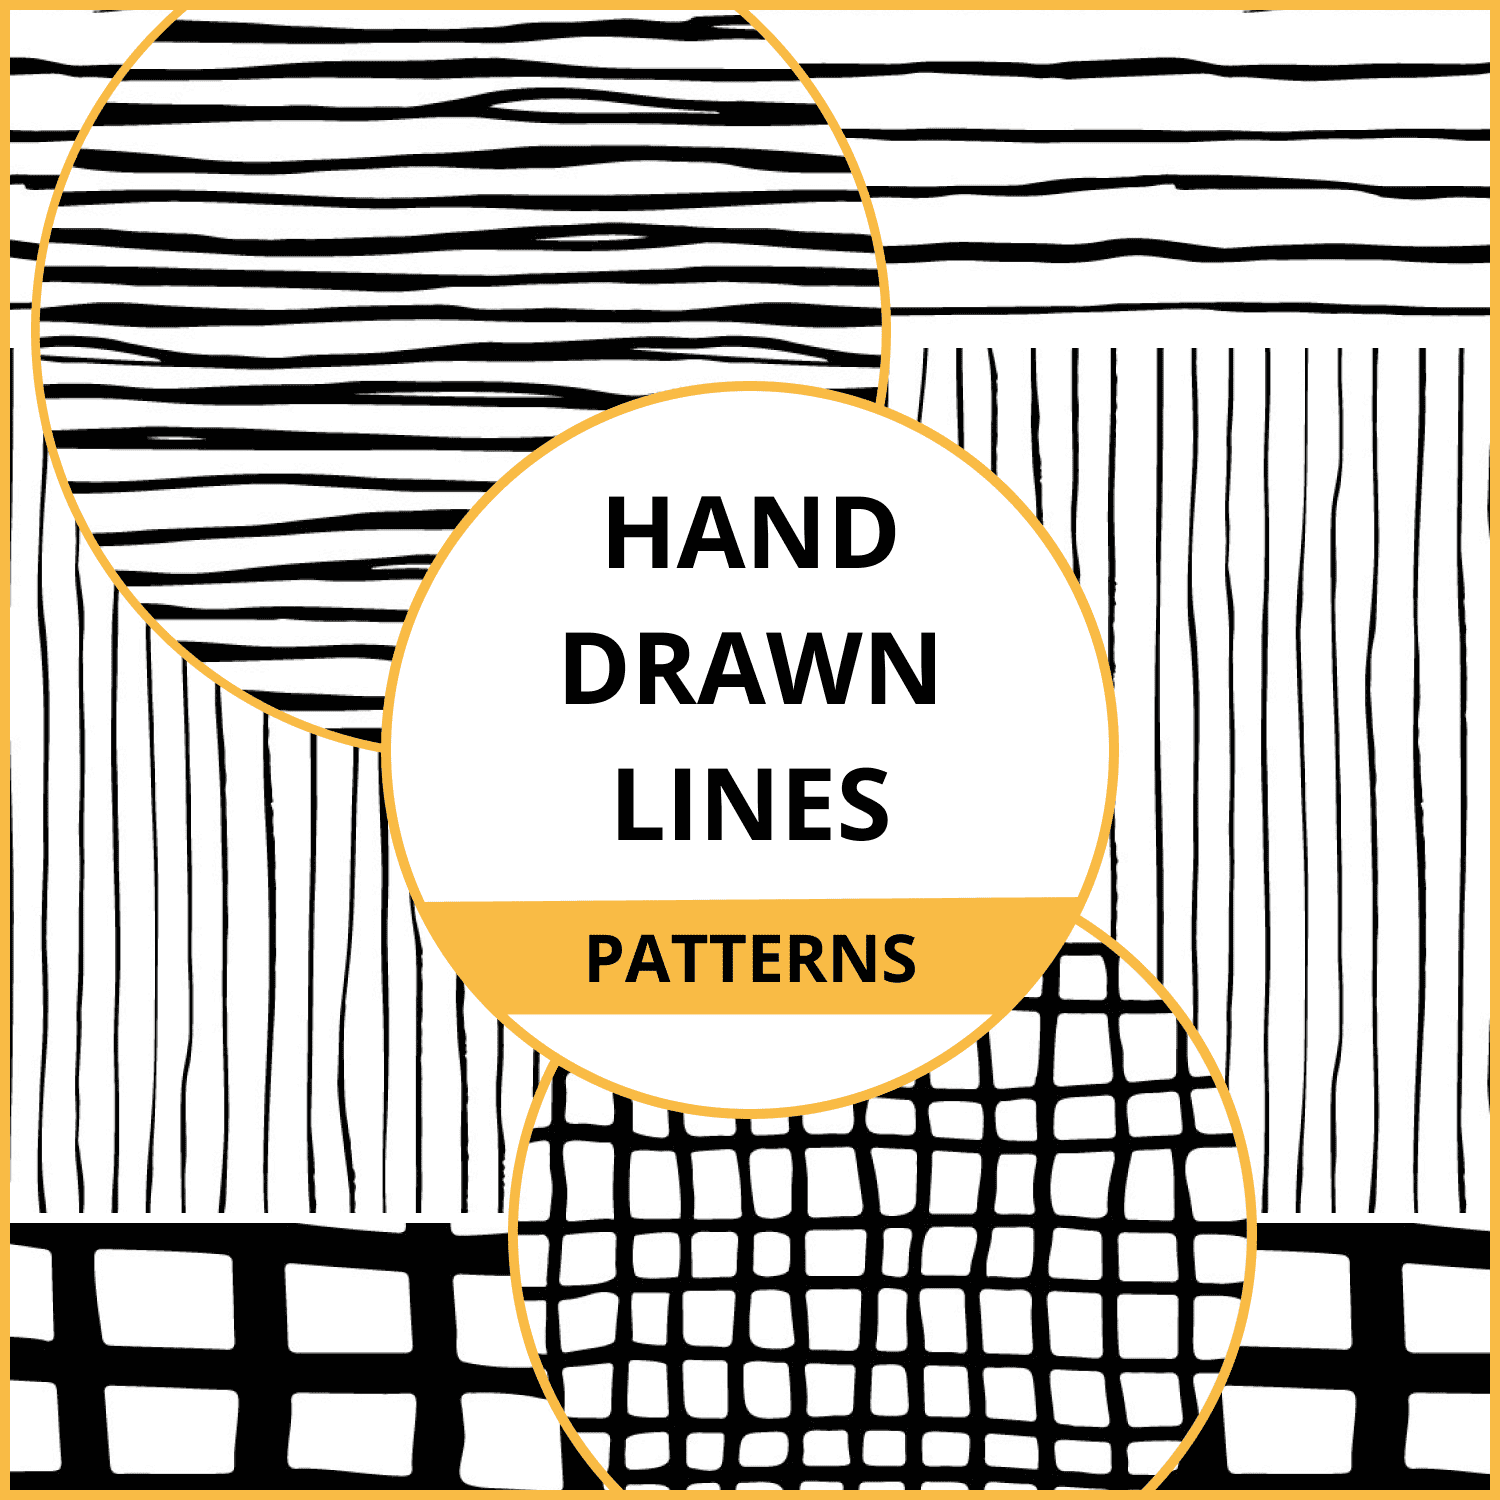 Hand drawn lines - patterns.